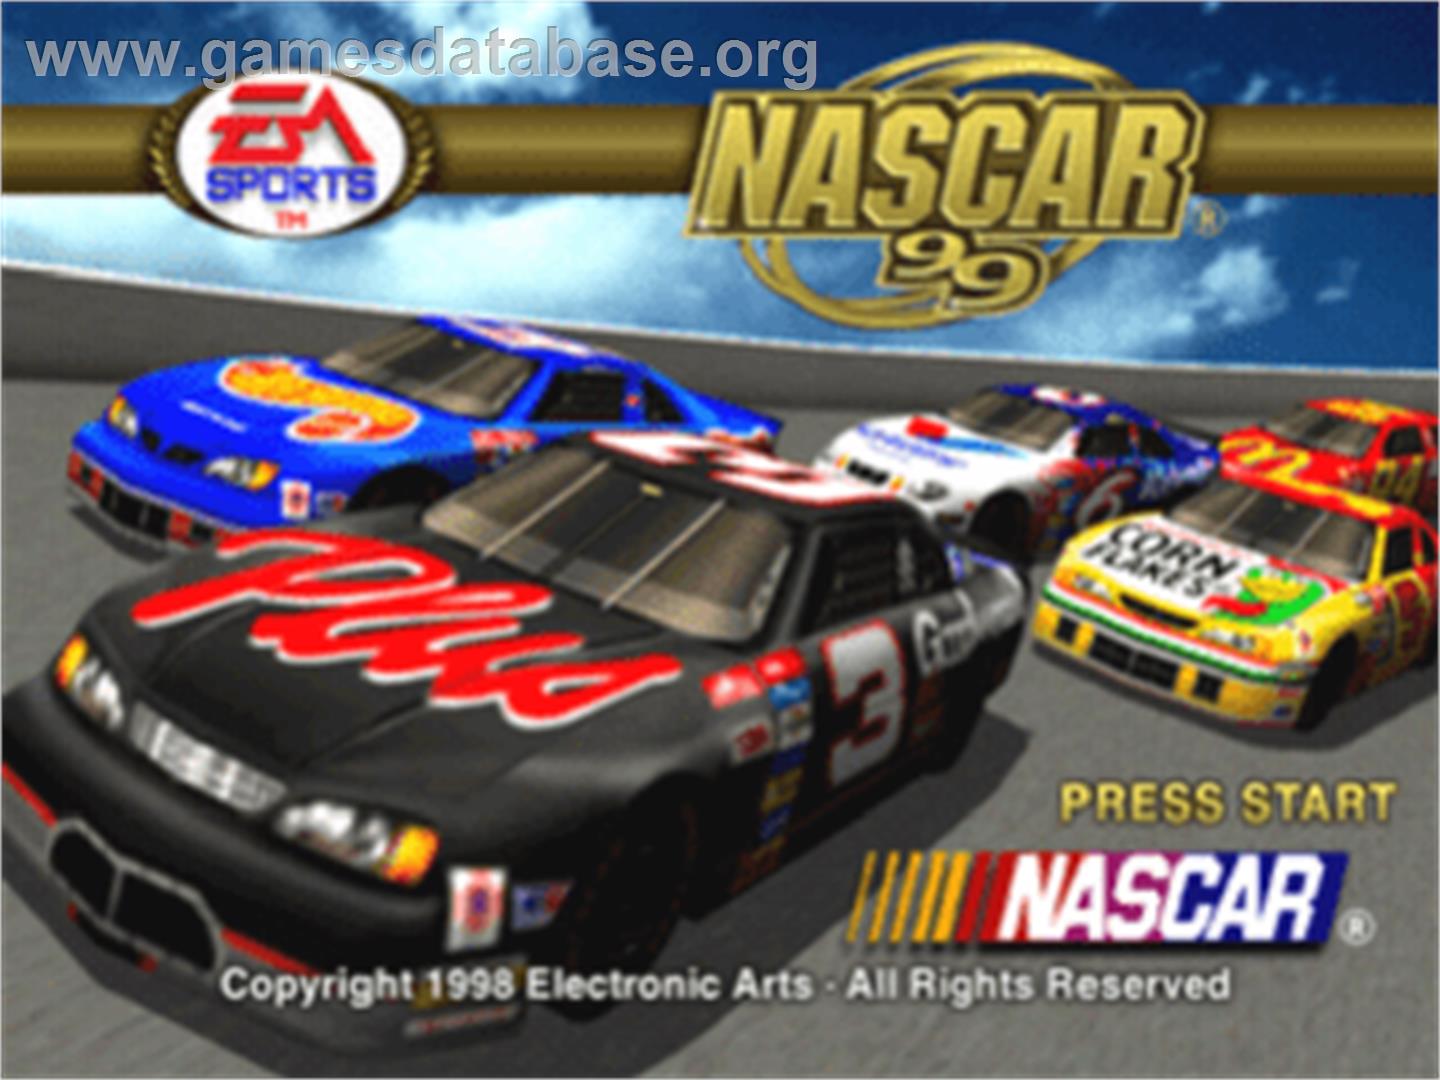 NASCAR 99 - Sony Playstation - Artwork - Title Screen